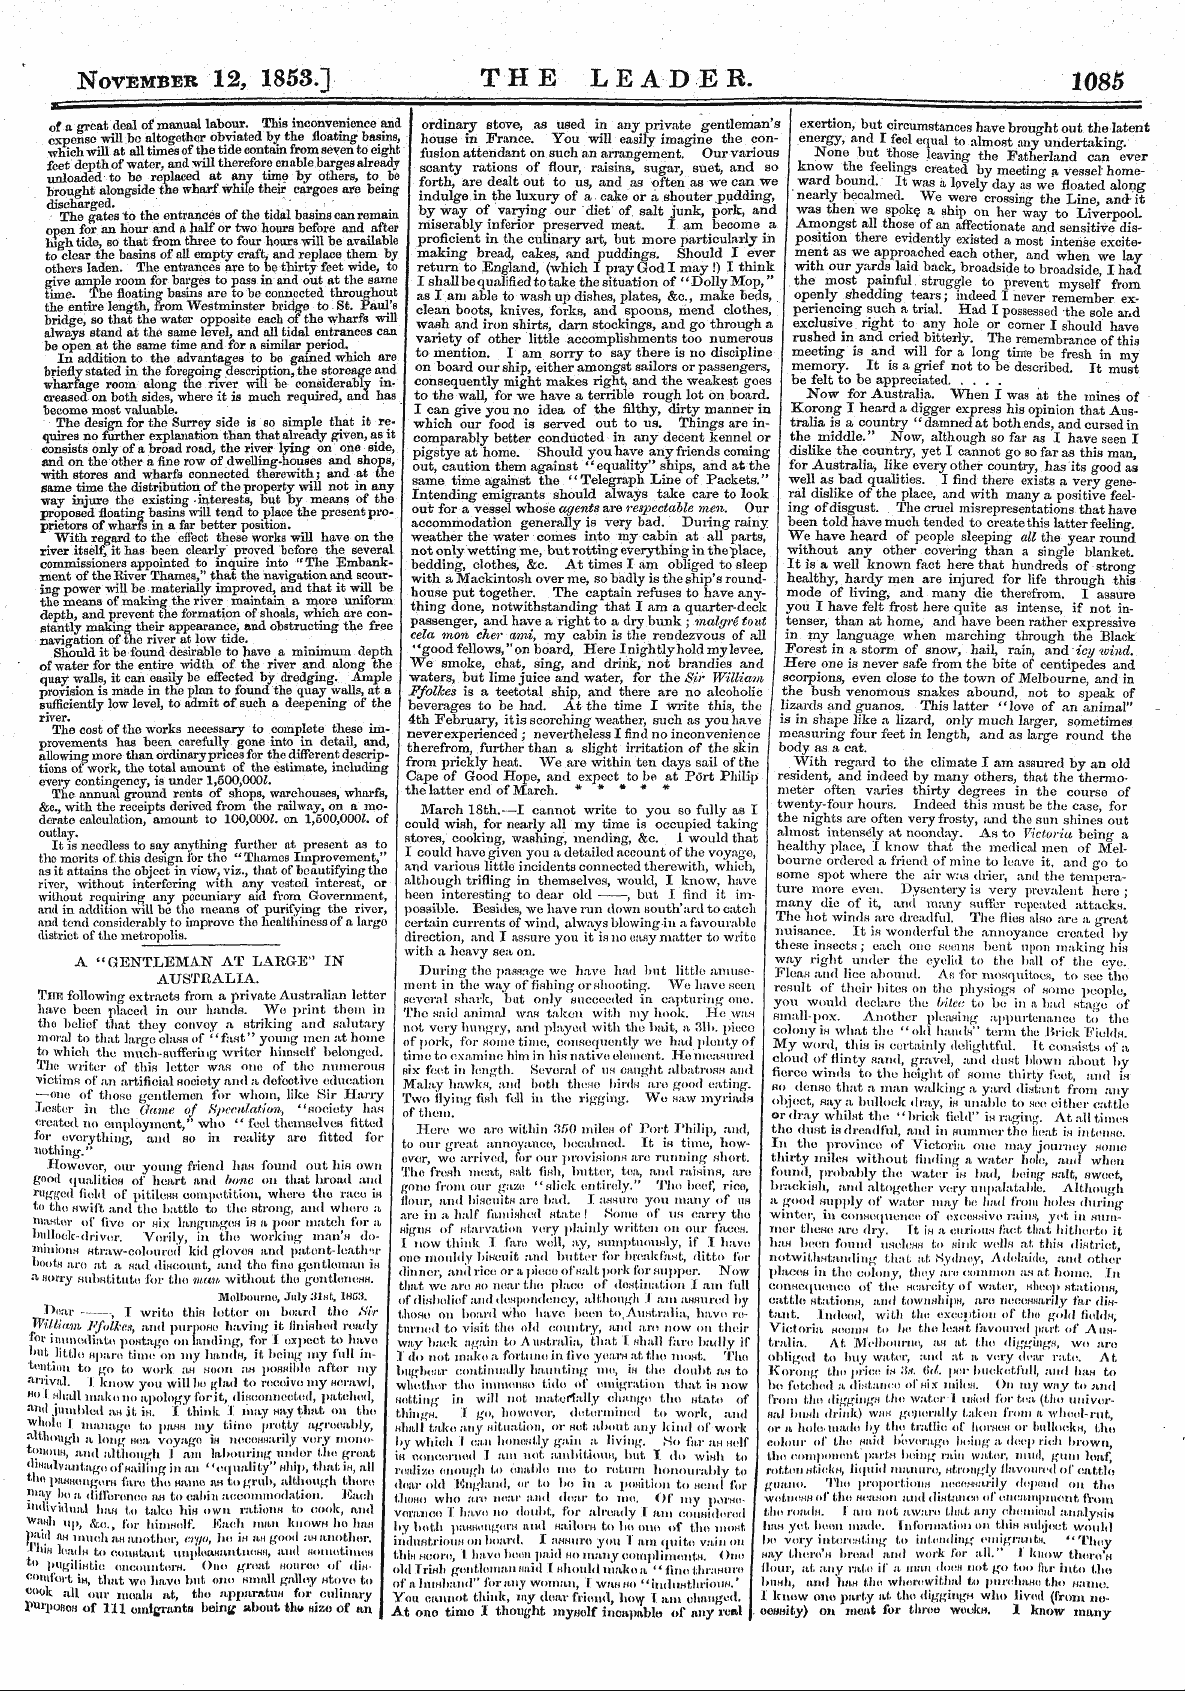 Leader (1850-1860): jS F Y, Country edition - November 12, 1853] T H E L E Ape R. 1085